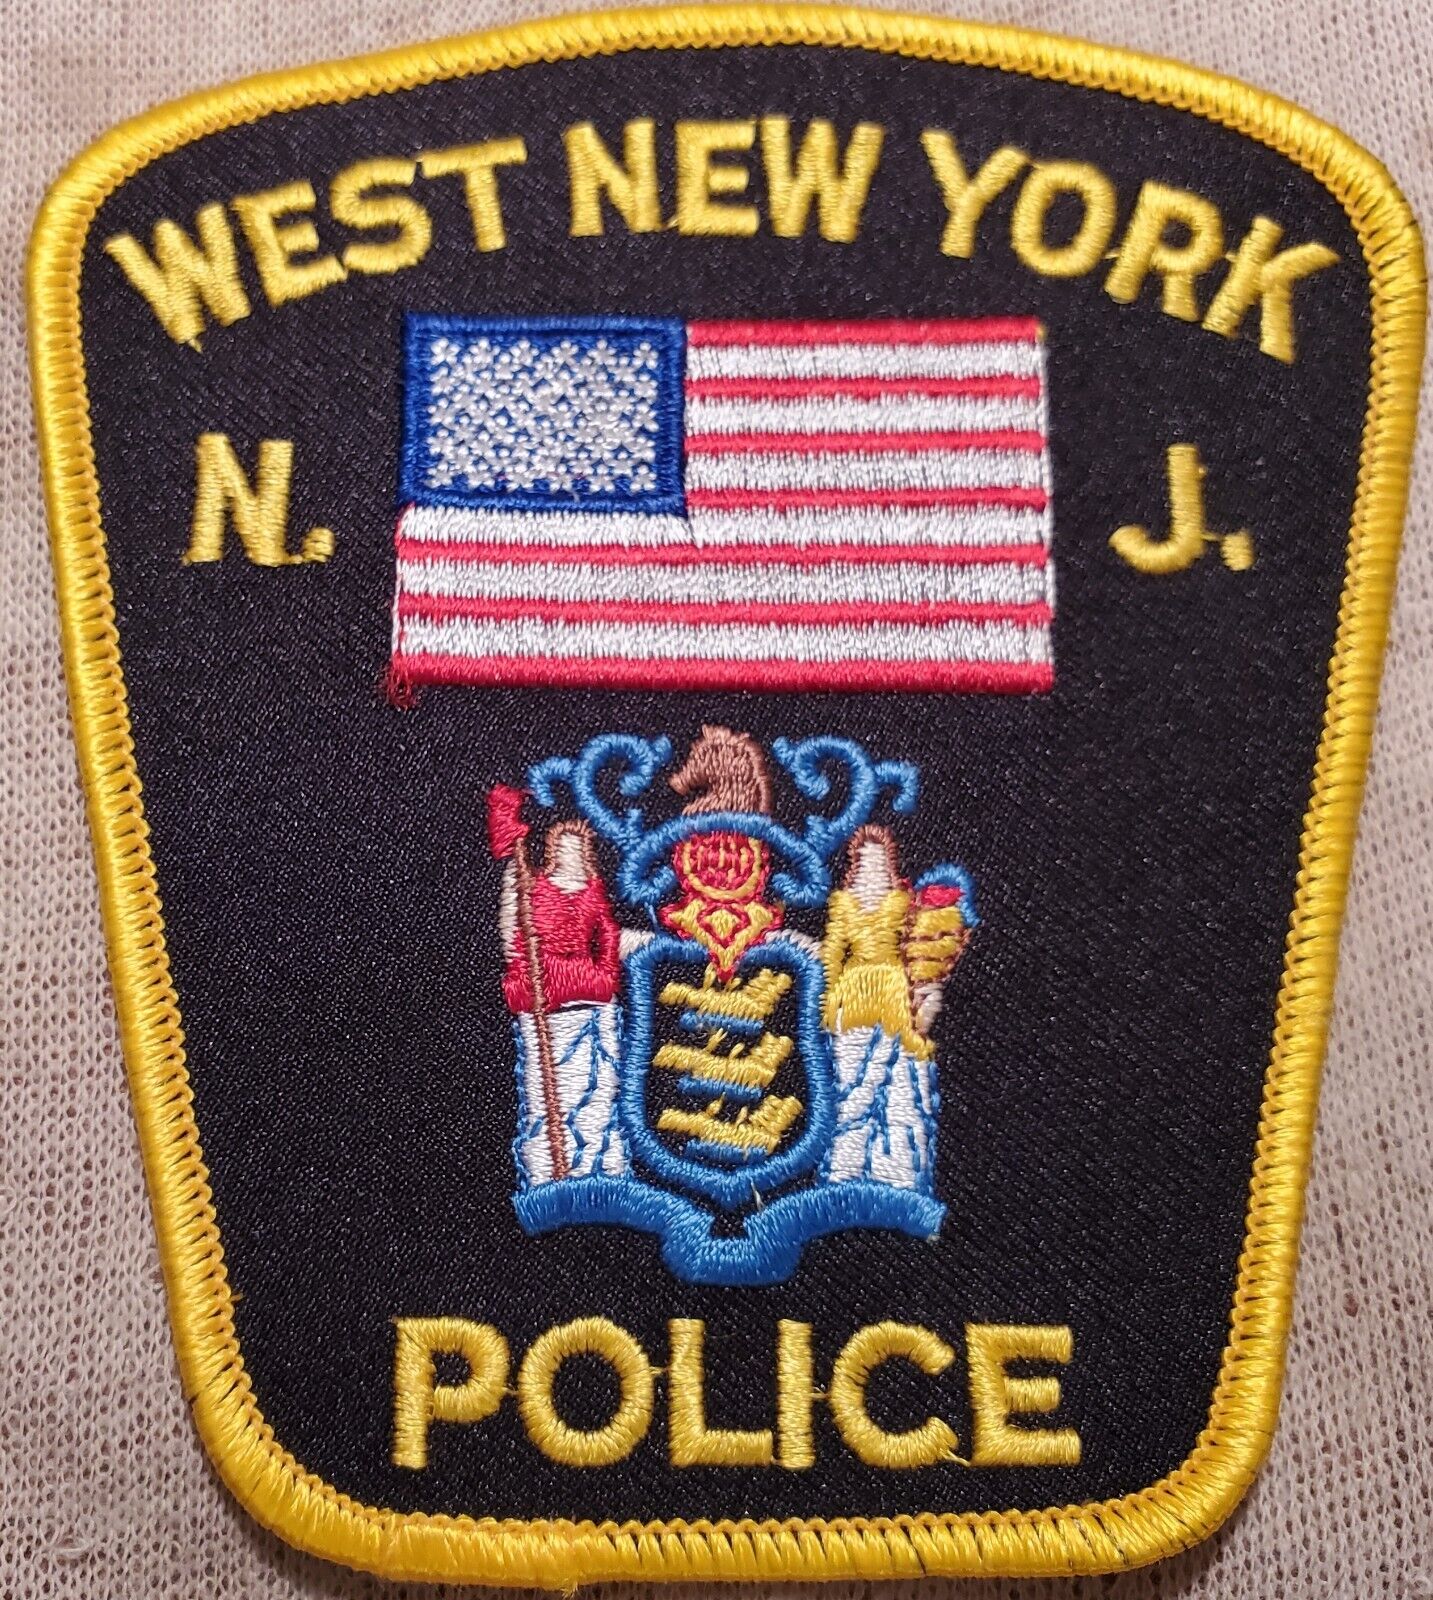 NJ West New York New Jersey Police Patch